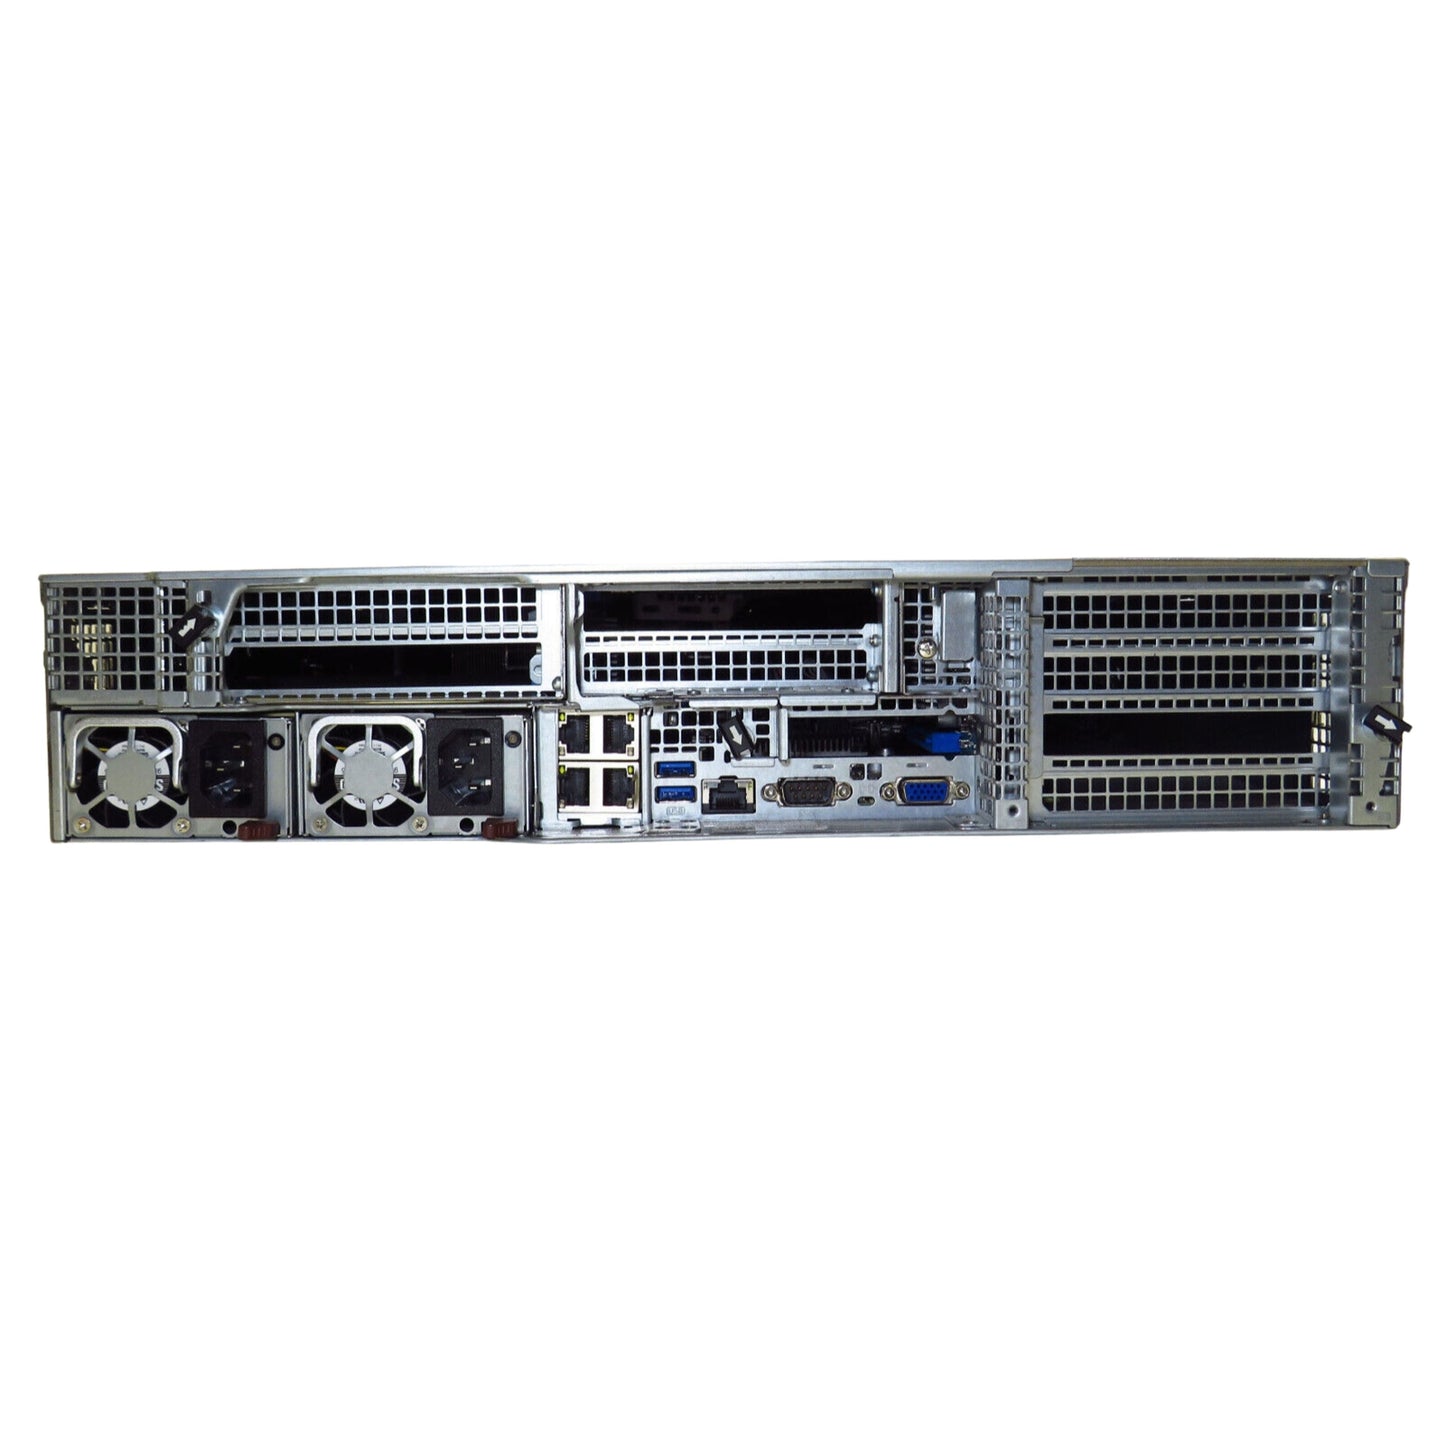 IBM 9006-22C 12 Bay LFF SAS3 12G 2x 9316 96GB RAM Power9 P9 Linux Server 2x PSU (Refurbished)